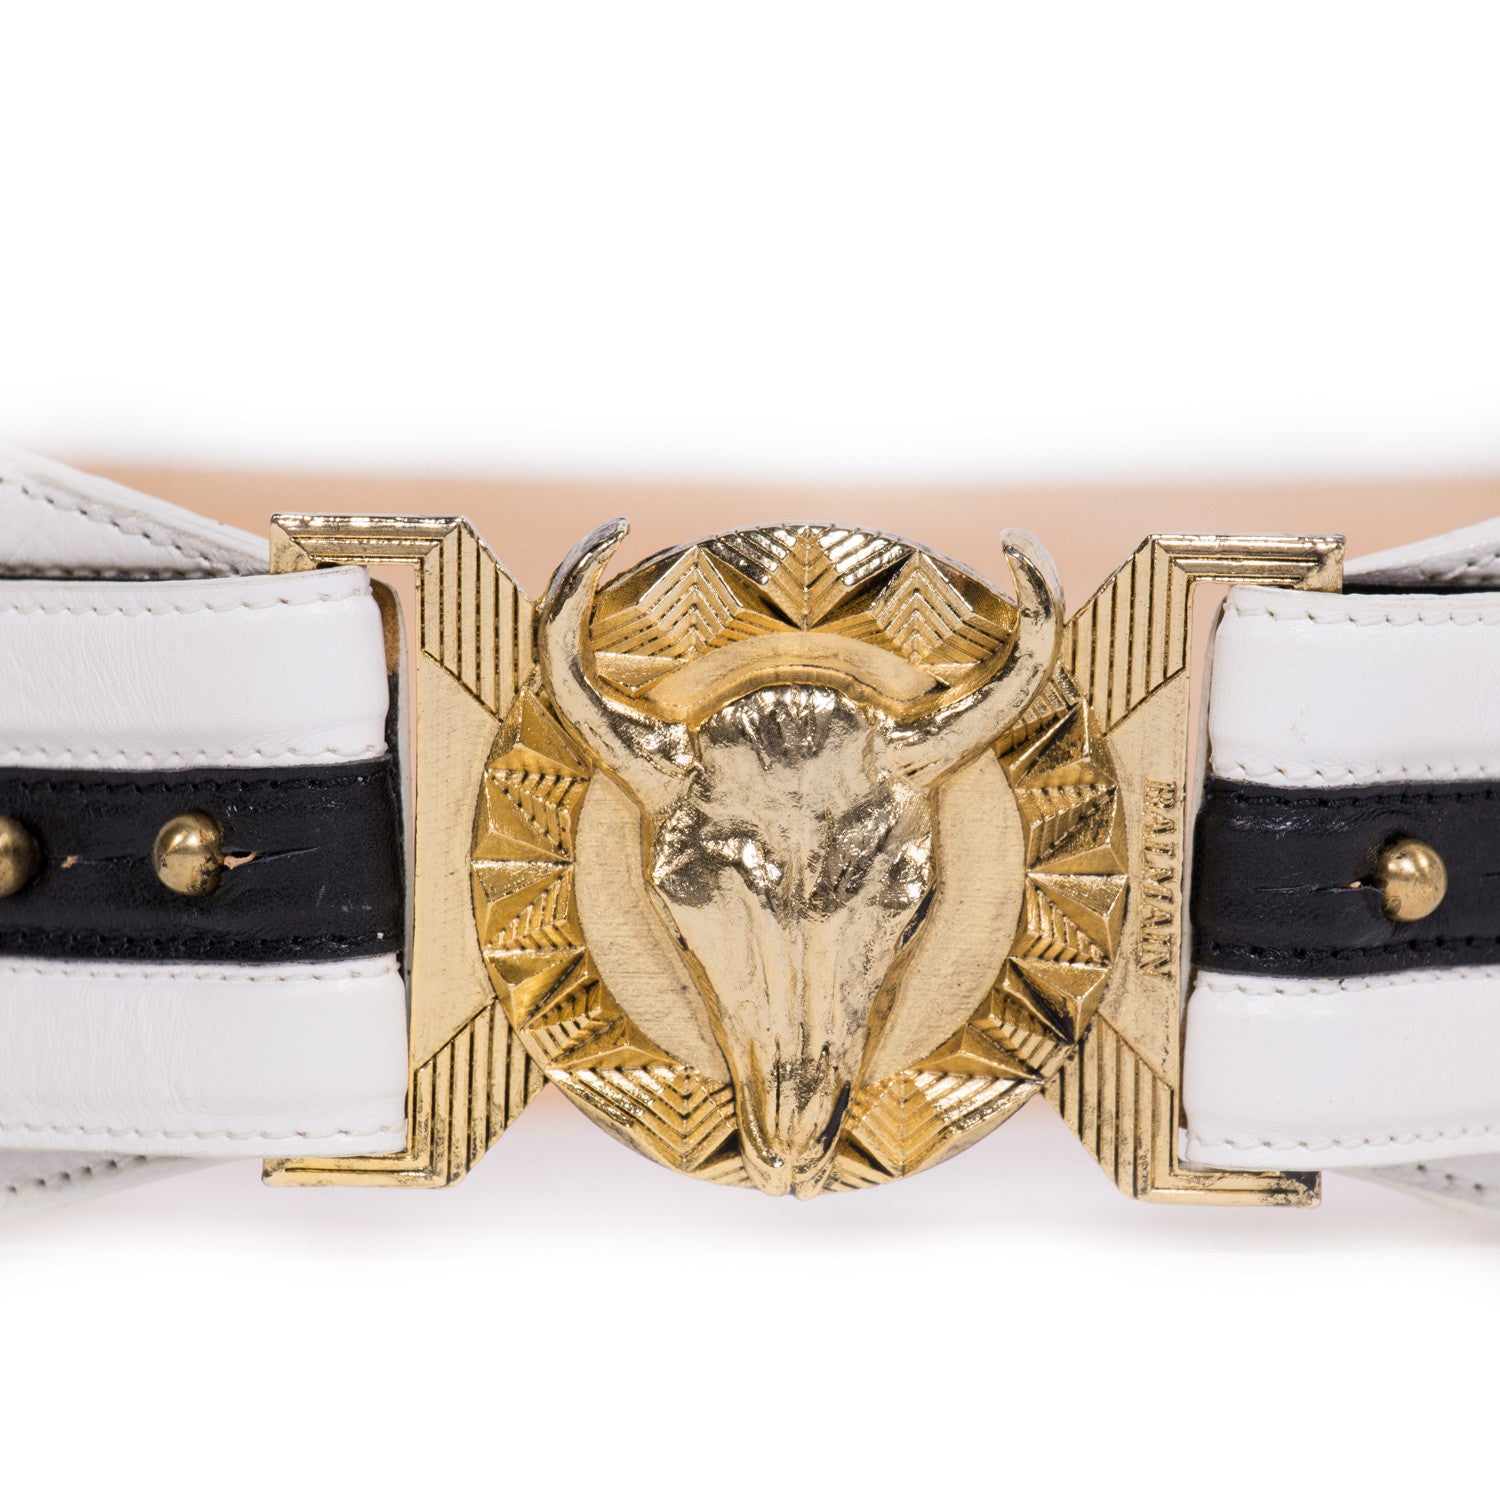 Shop authentic Balmain Bull Head Belt at revogue for just USD 269.00